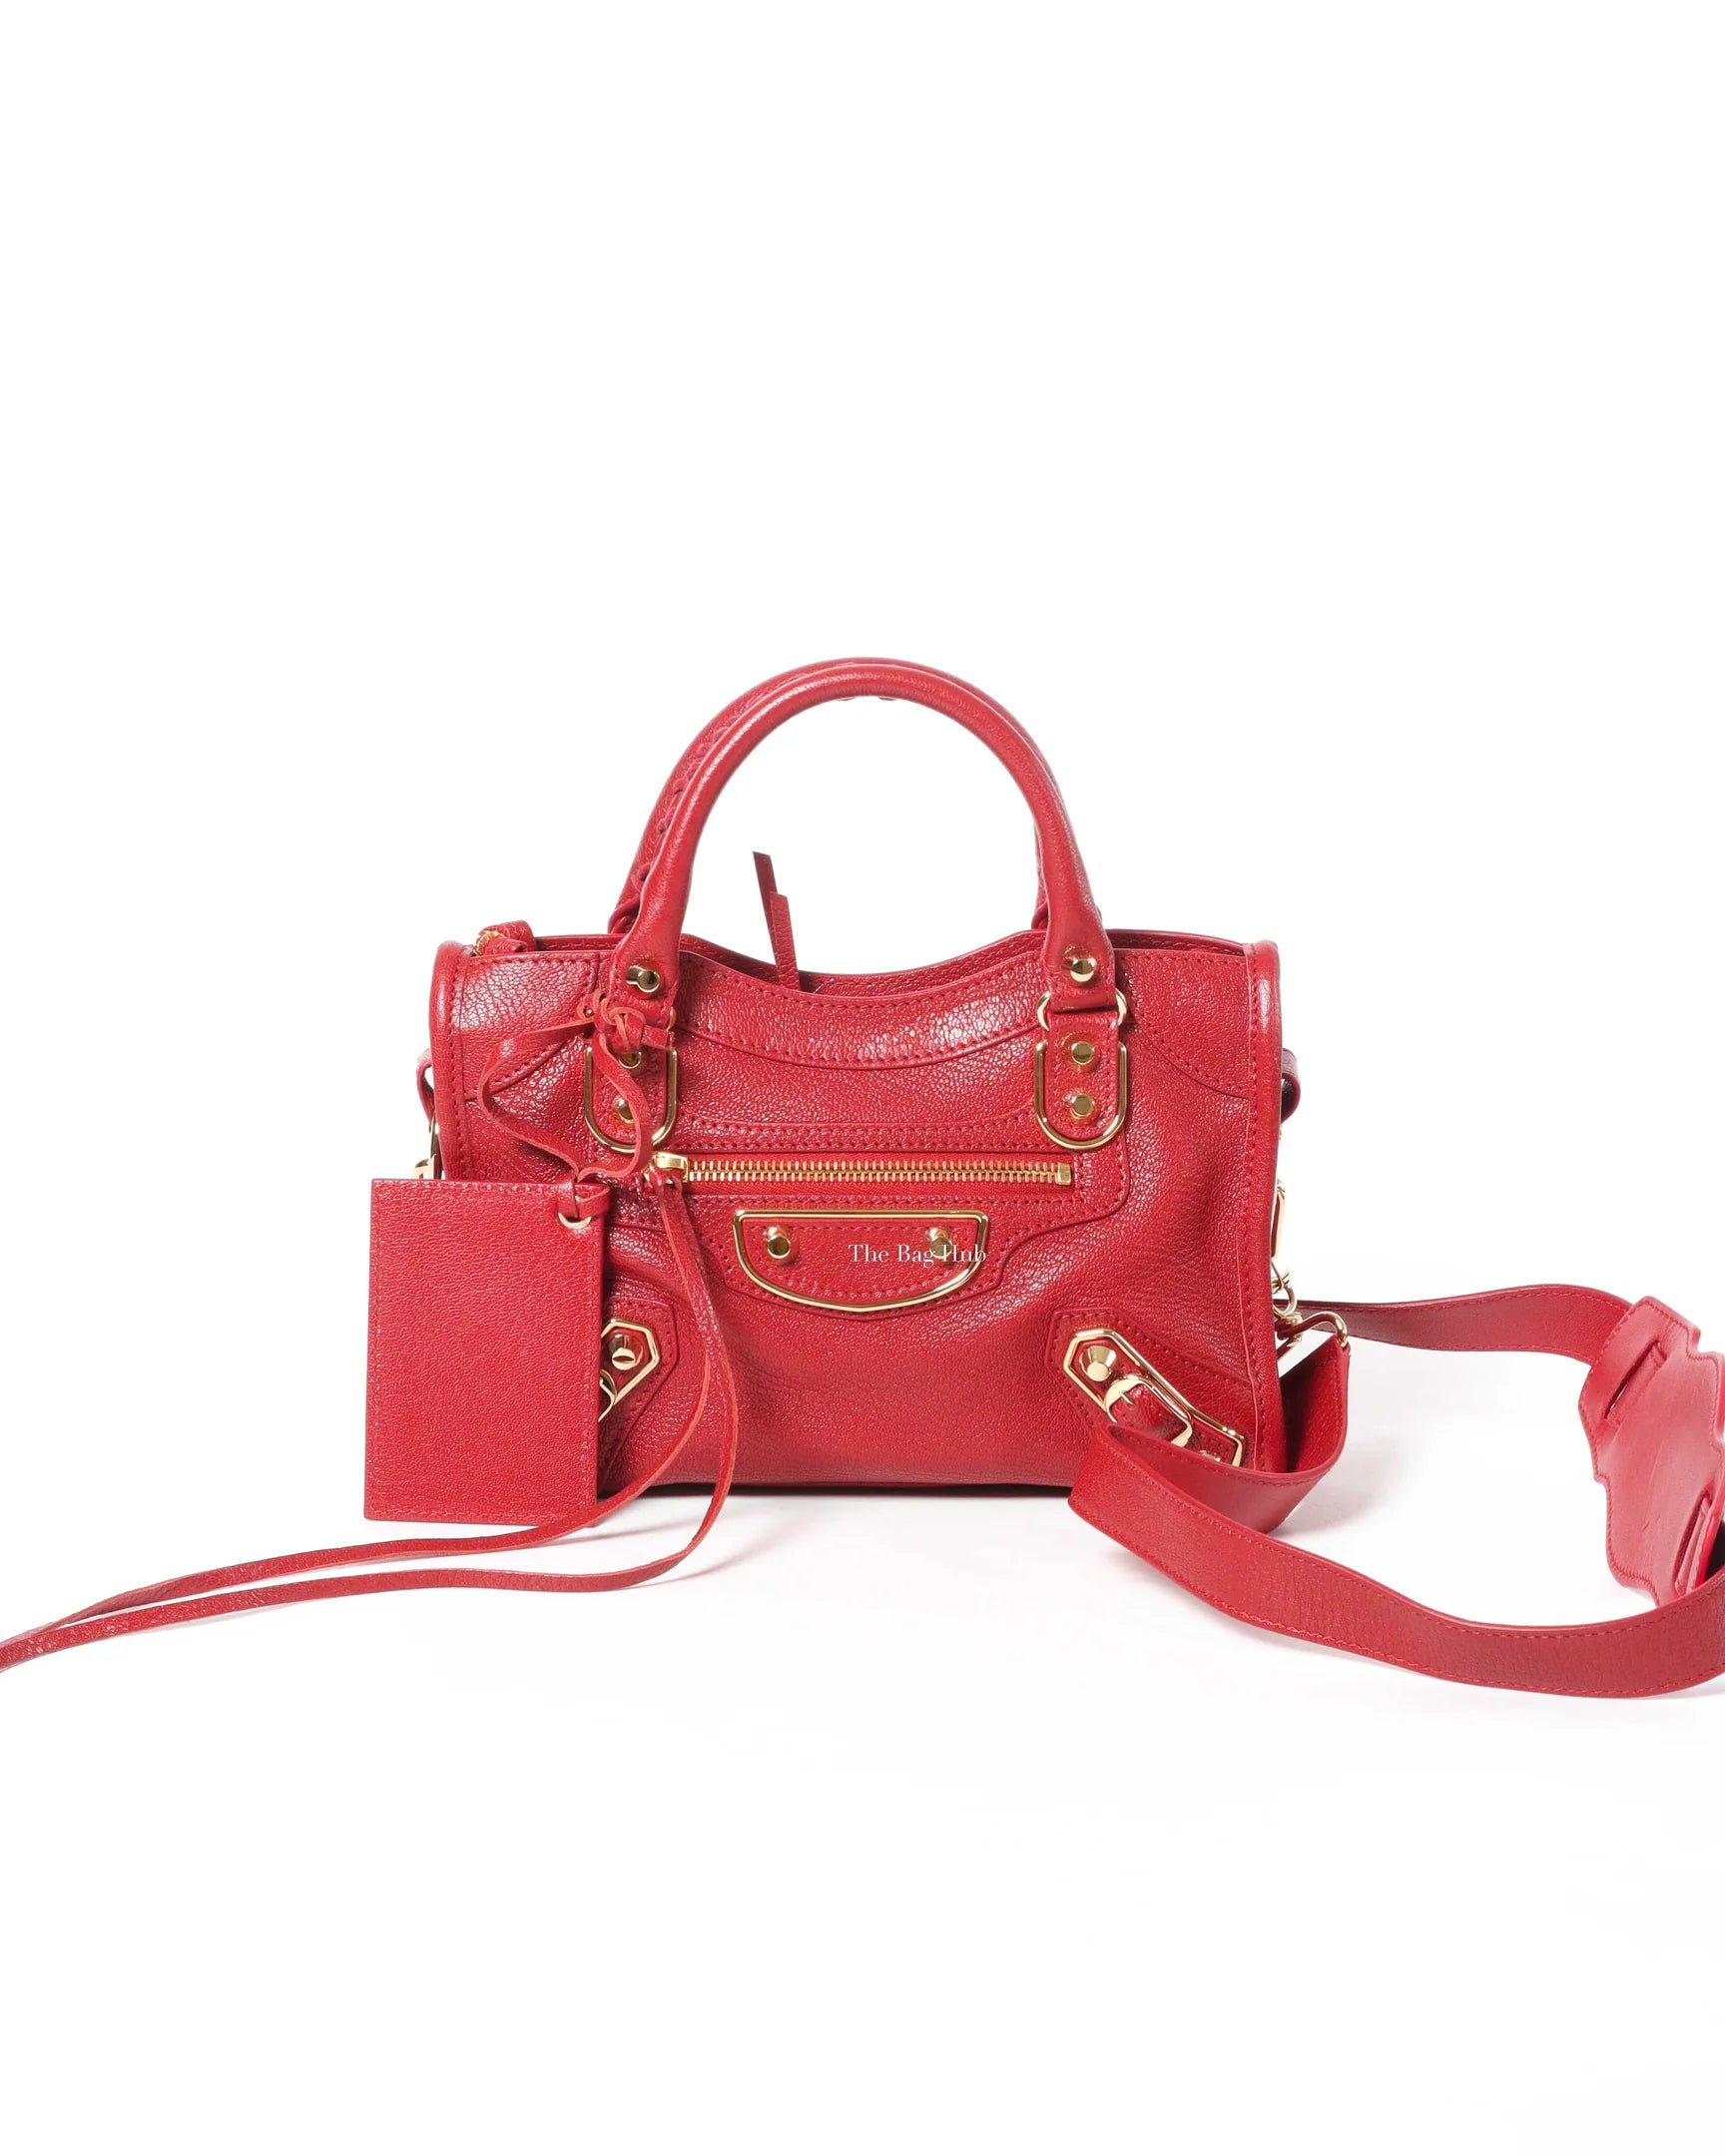 Balenciaga Red Mini Bag to rent, Valentine's day, Date night - designer tas huren Nederland, België.Location de vêtements de créateurs en Belgique